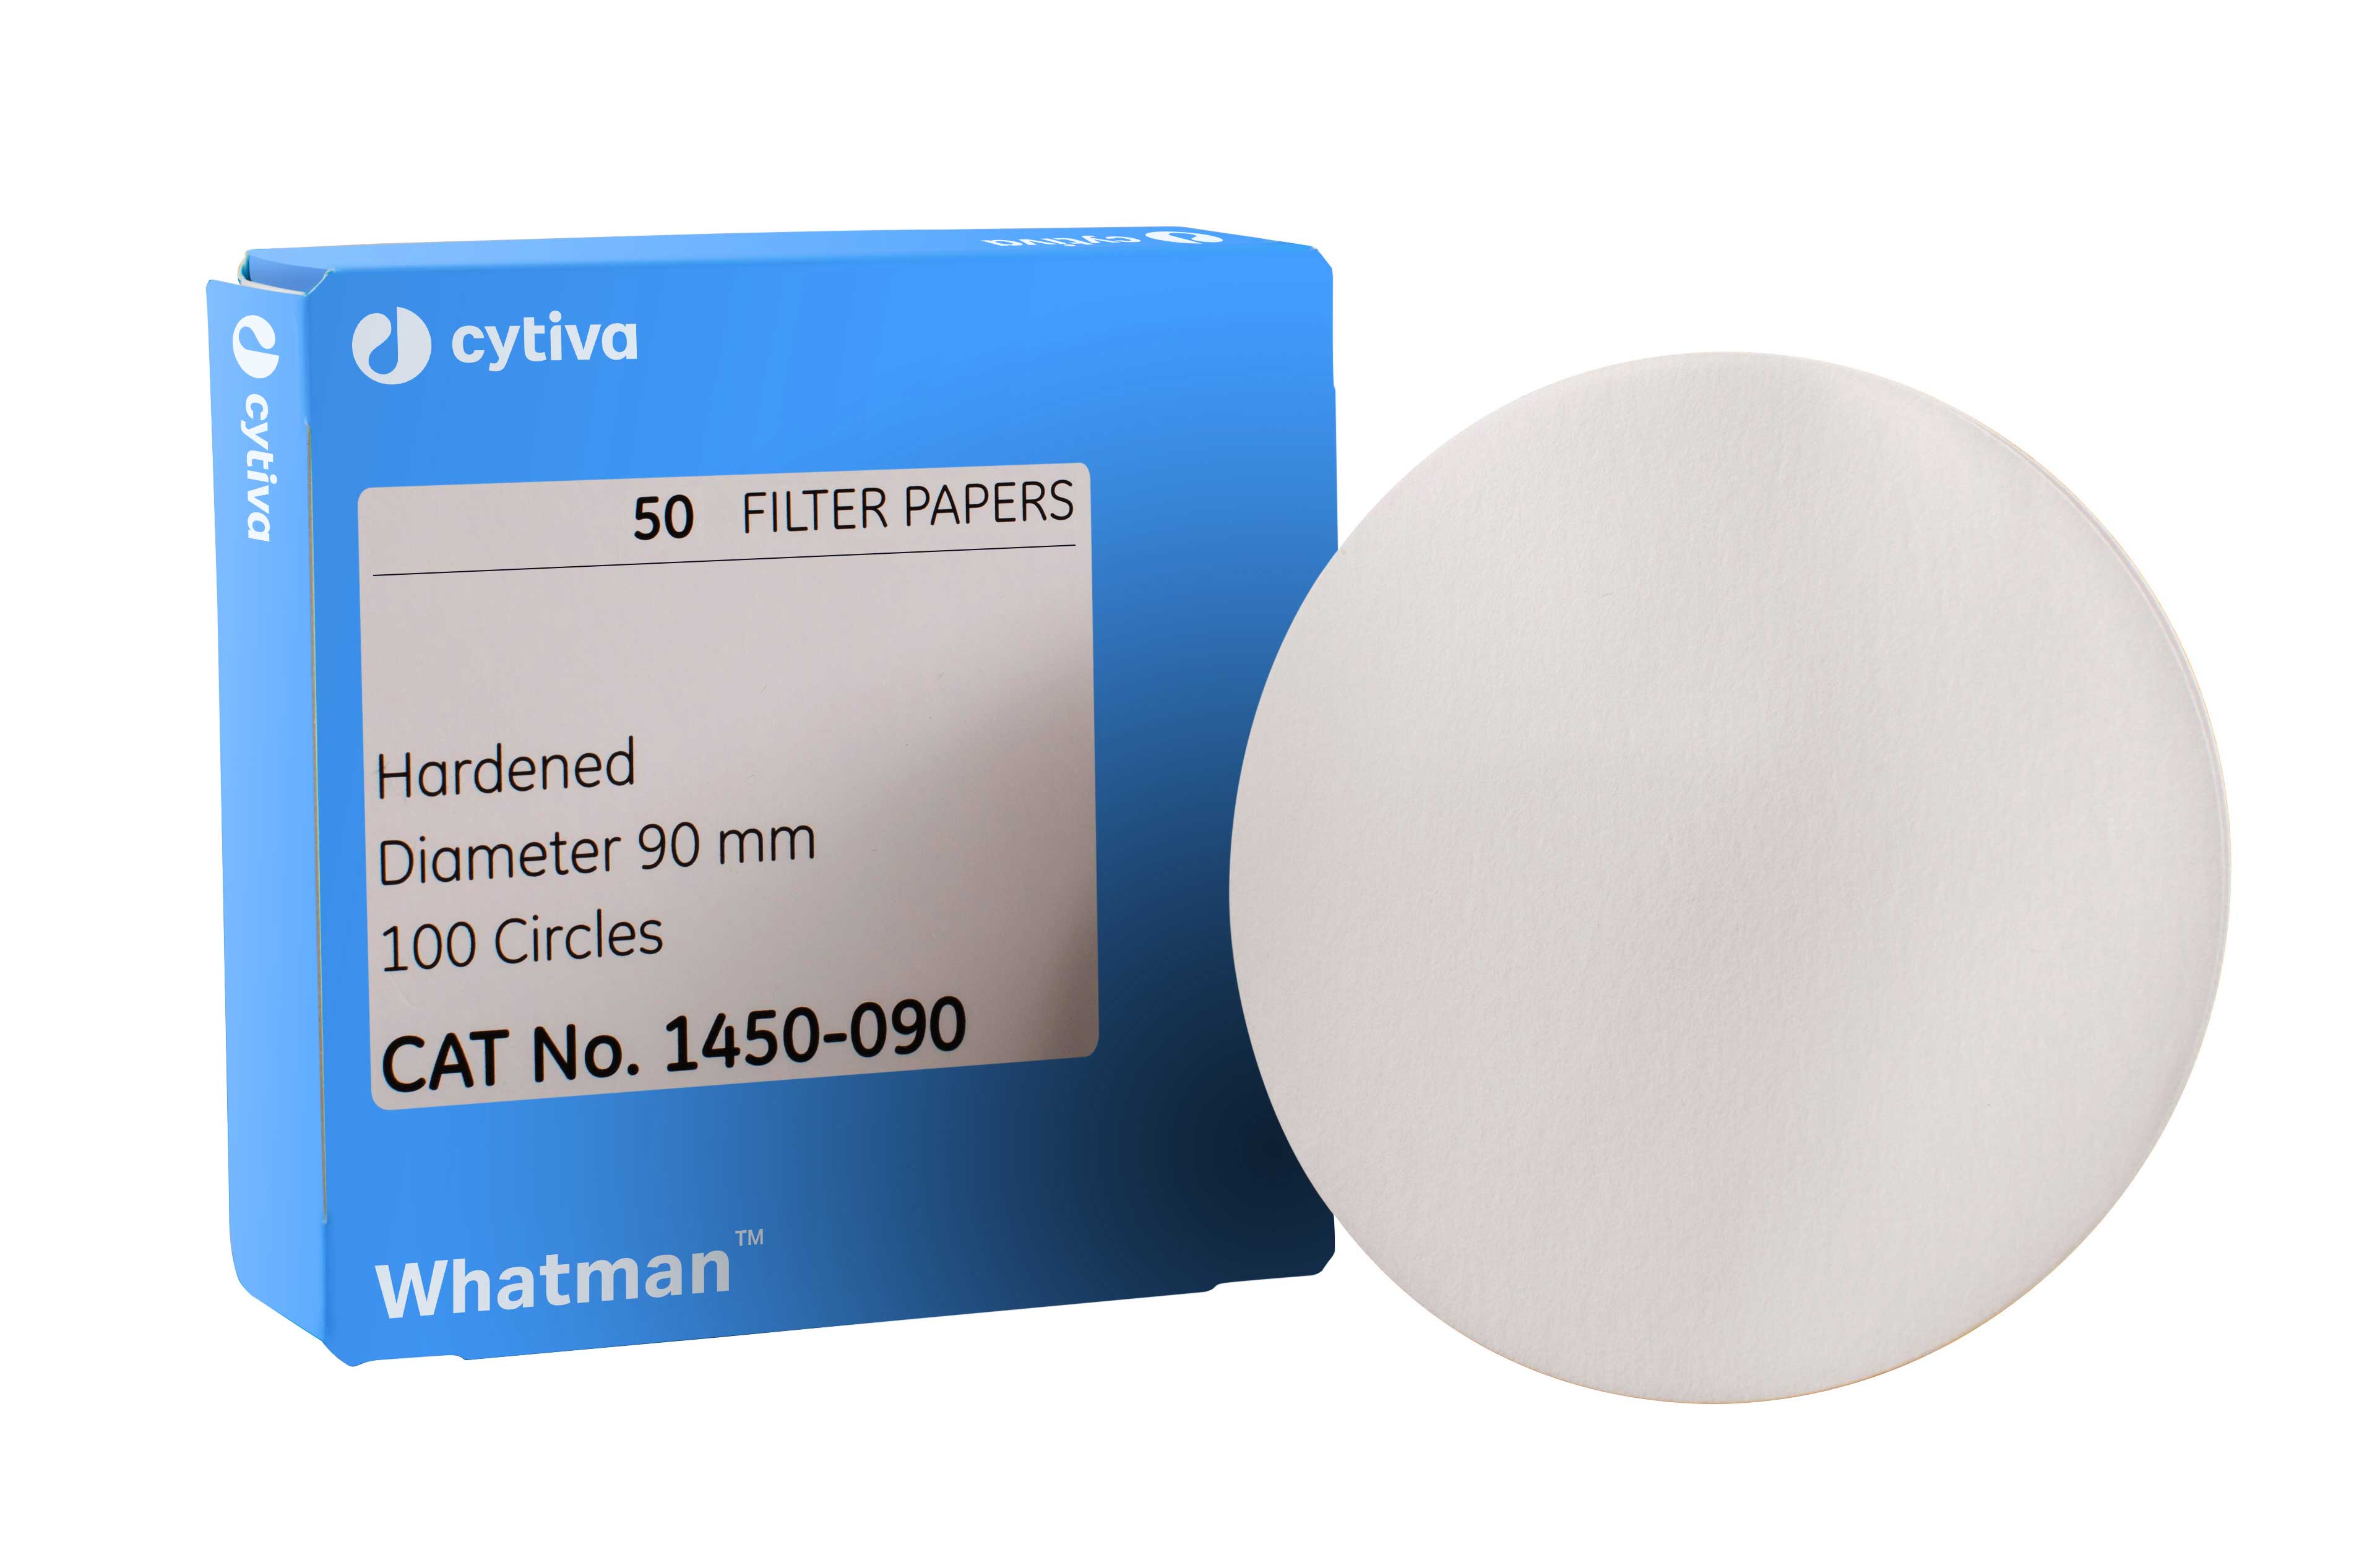 Filtro de papel de celulosa pura. Whatman™ (Cytiva). Disco Grado 50 Celulosa pura sin cenizas. Ø (mm): 55. Retención típica (µm): 2,7